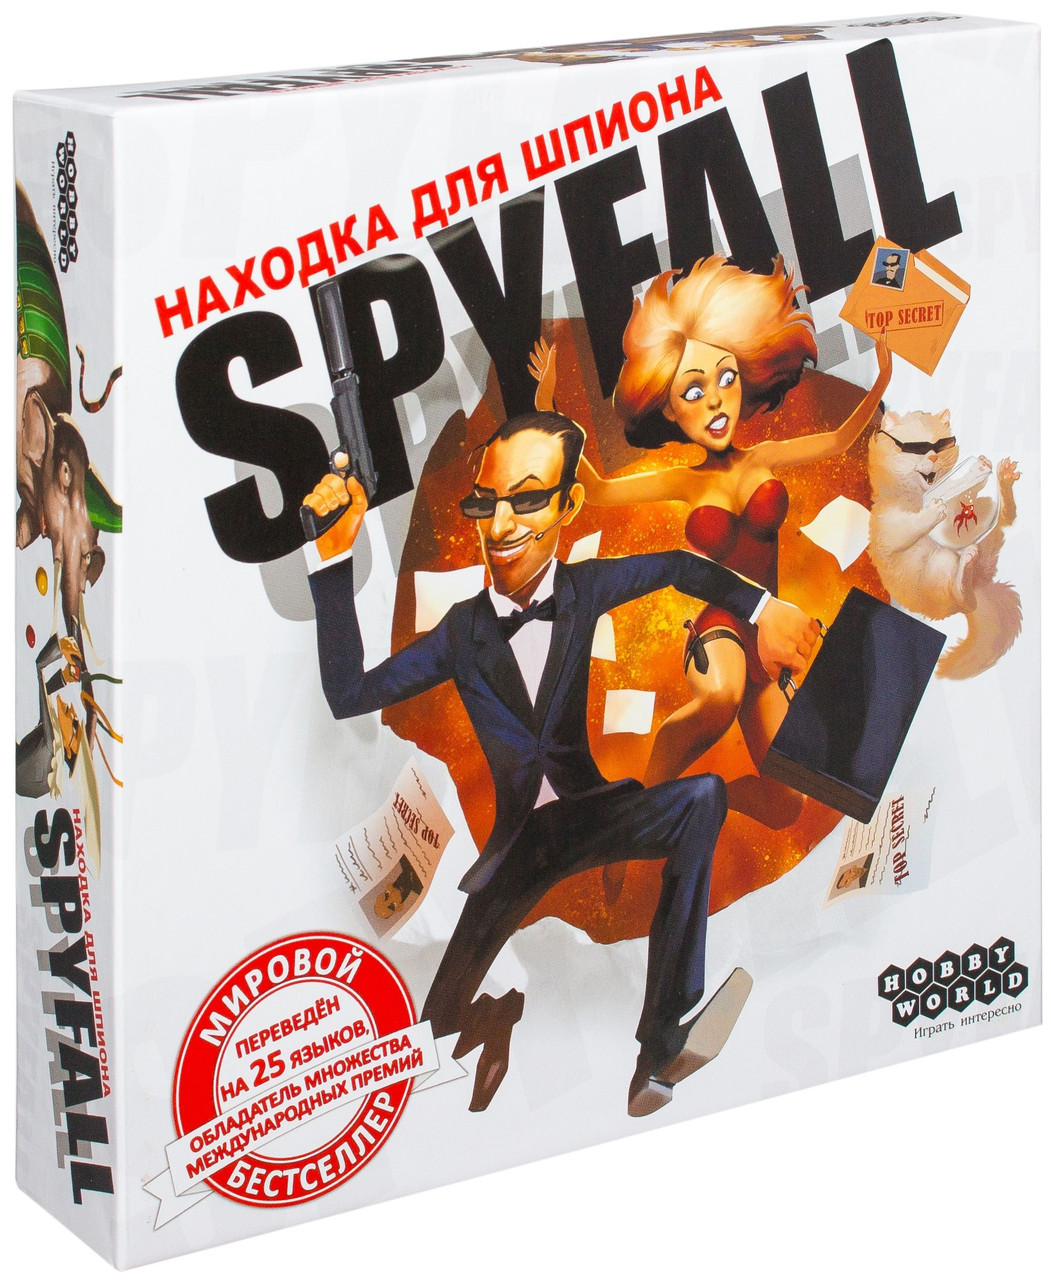 Настольная игра Находка для шпиона/ Spyfall HobbyWorld, фото 1